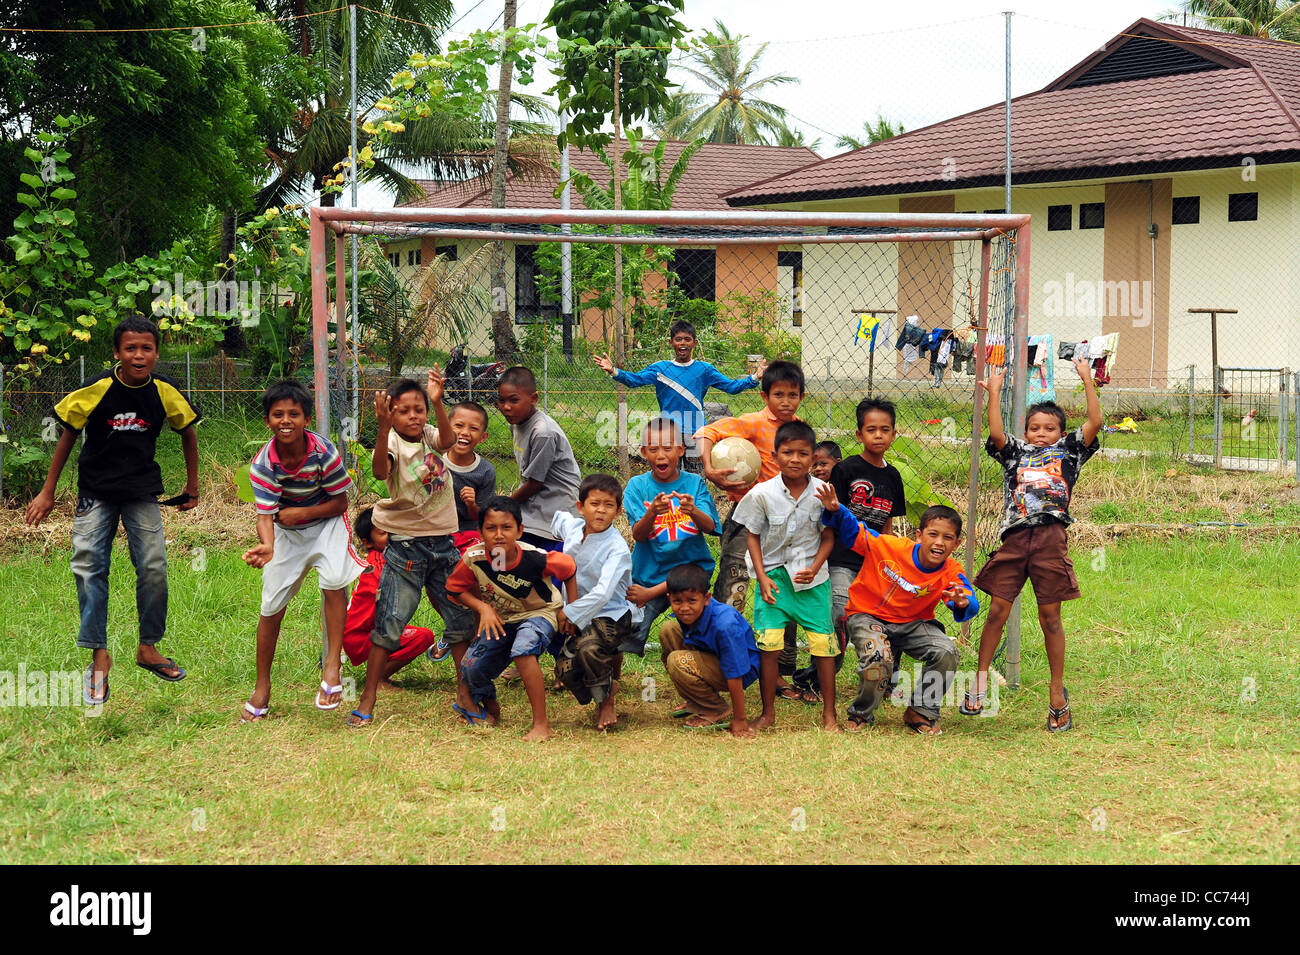 Indonesia, Sumatra, Banda Aceh, group of happy children jumping Stock Photo